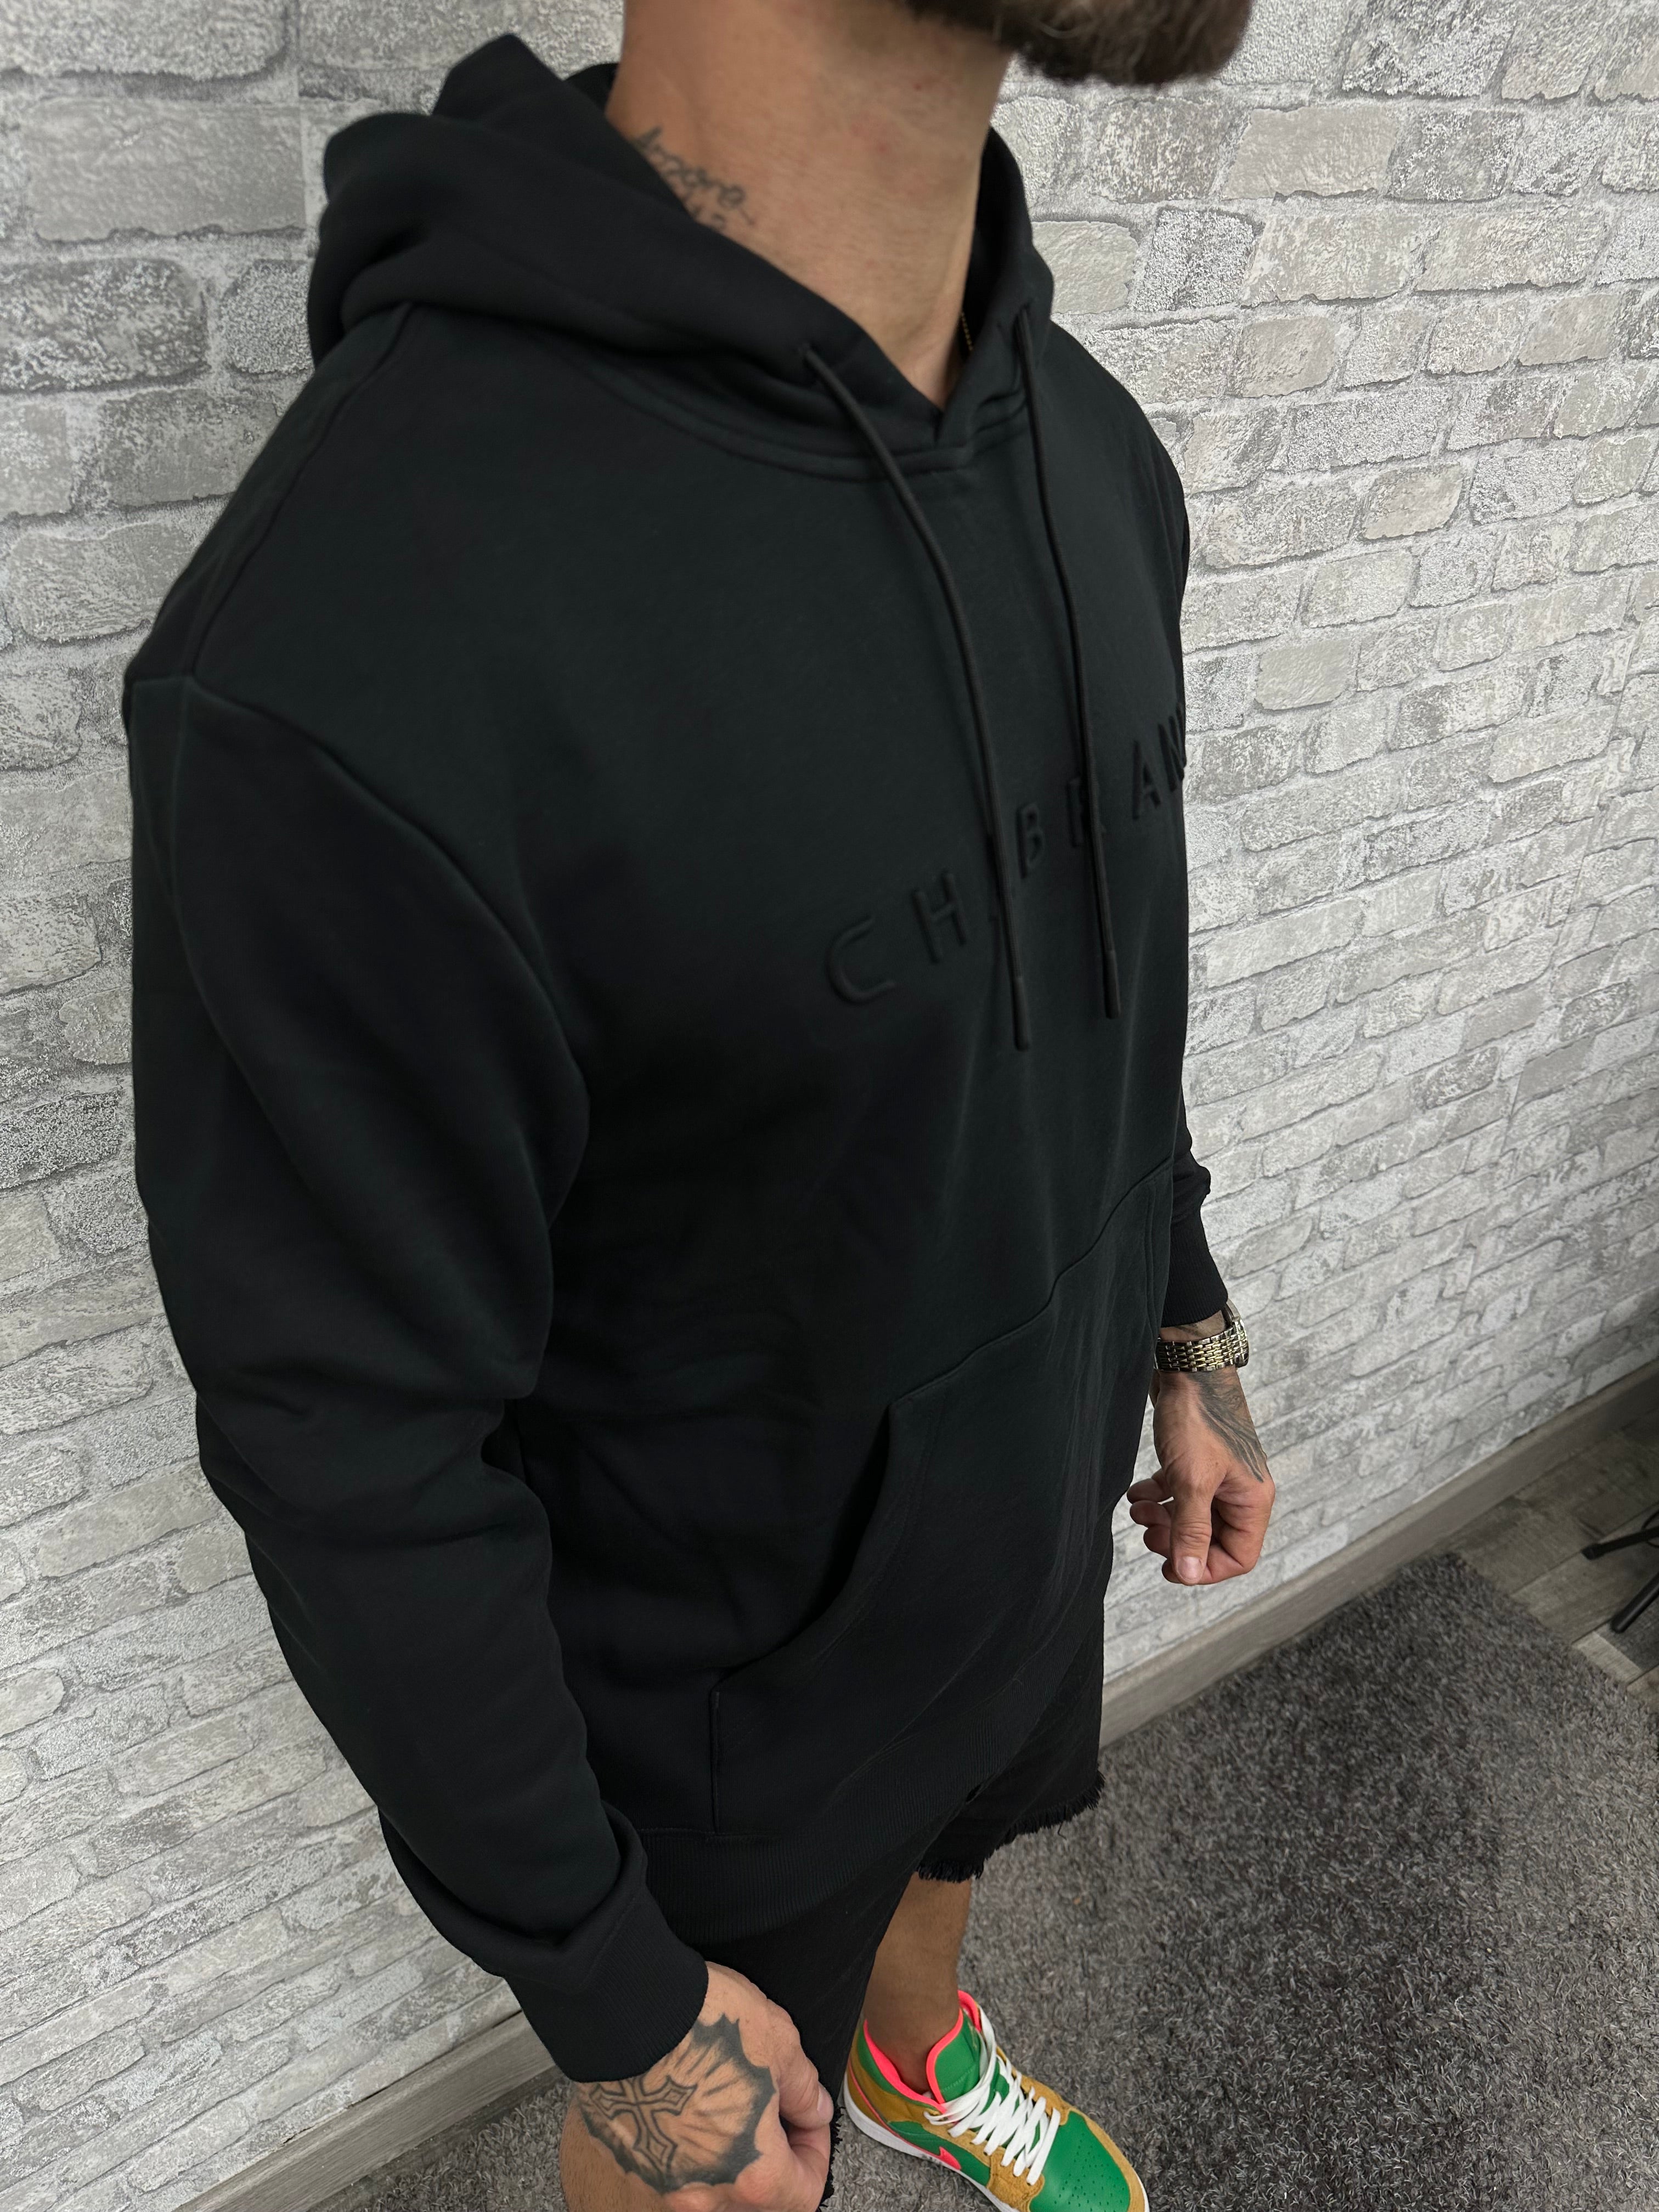 CHABRAND - Black hooded sweatshirt with black sign